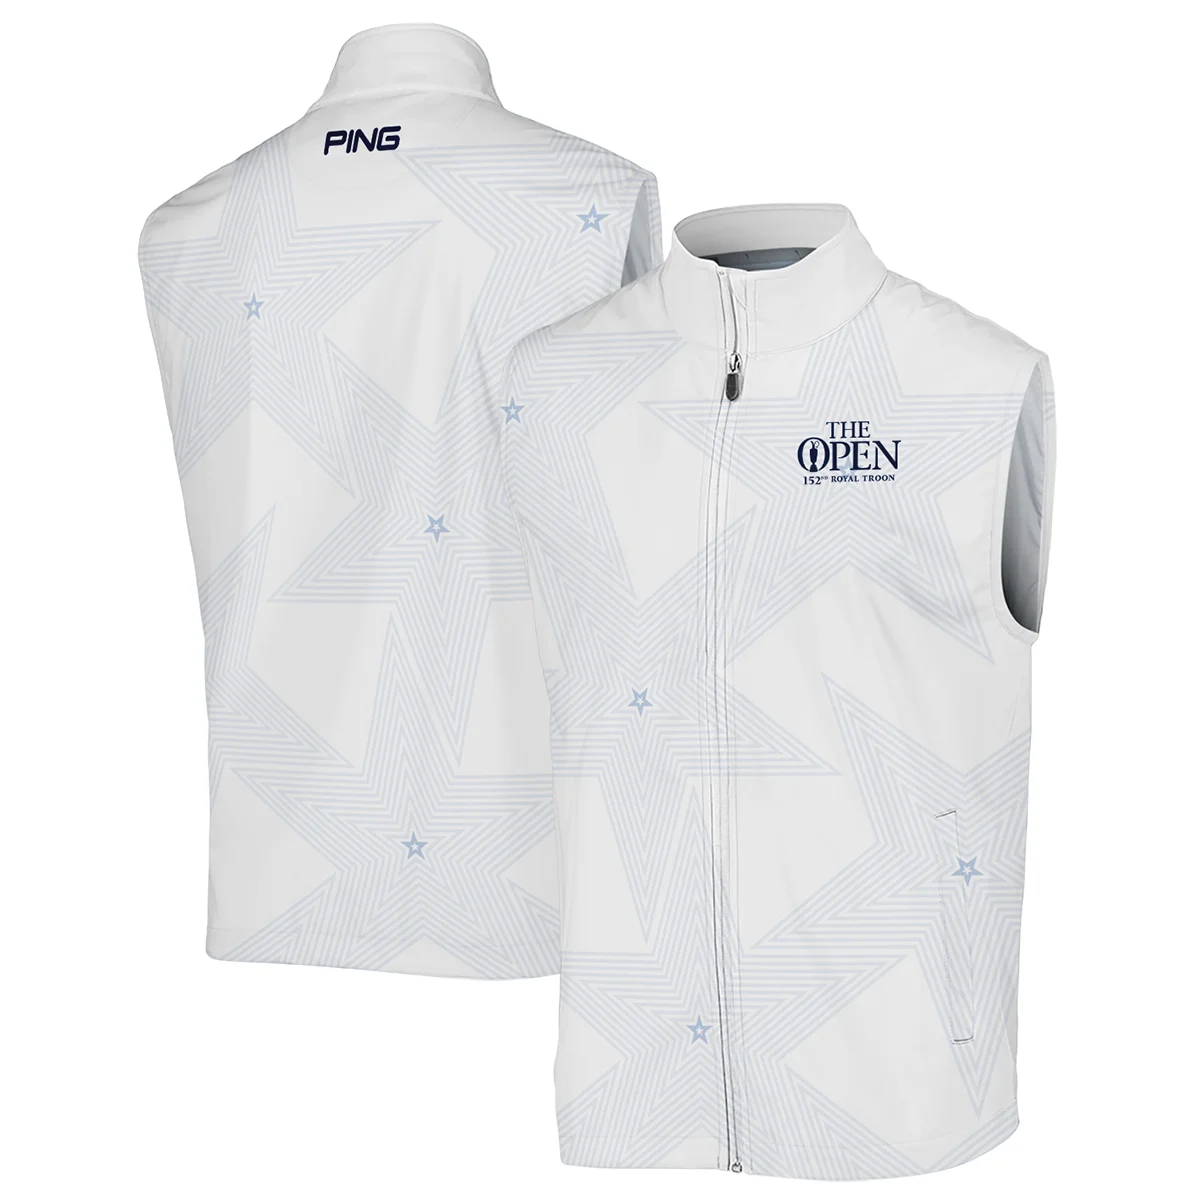 152nd The Open Championship Golf Ping Sleeveless Jacket Stars White Navy Golf Sports All Over Print Sleeveless Jacket